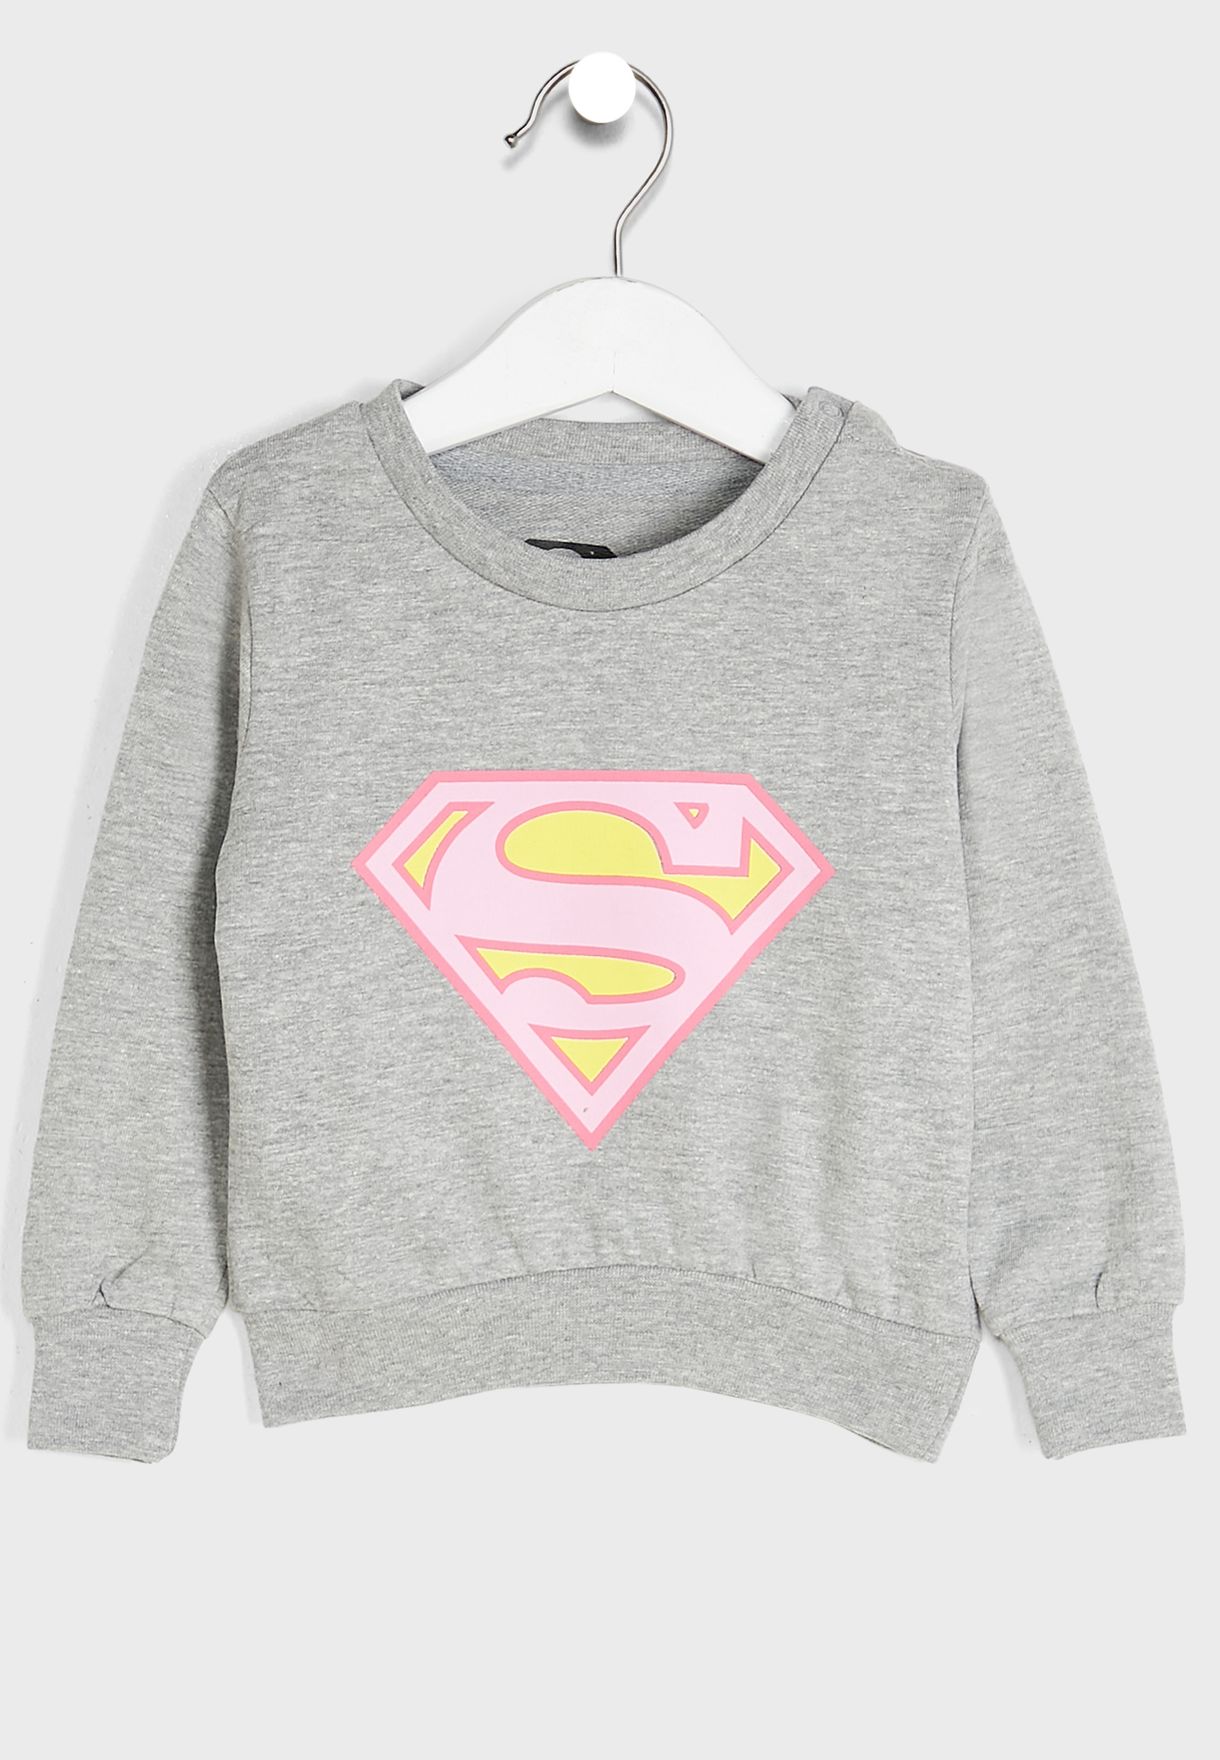 Infant Superman Sweatshirt